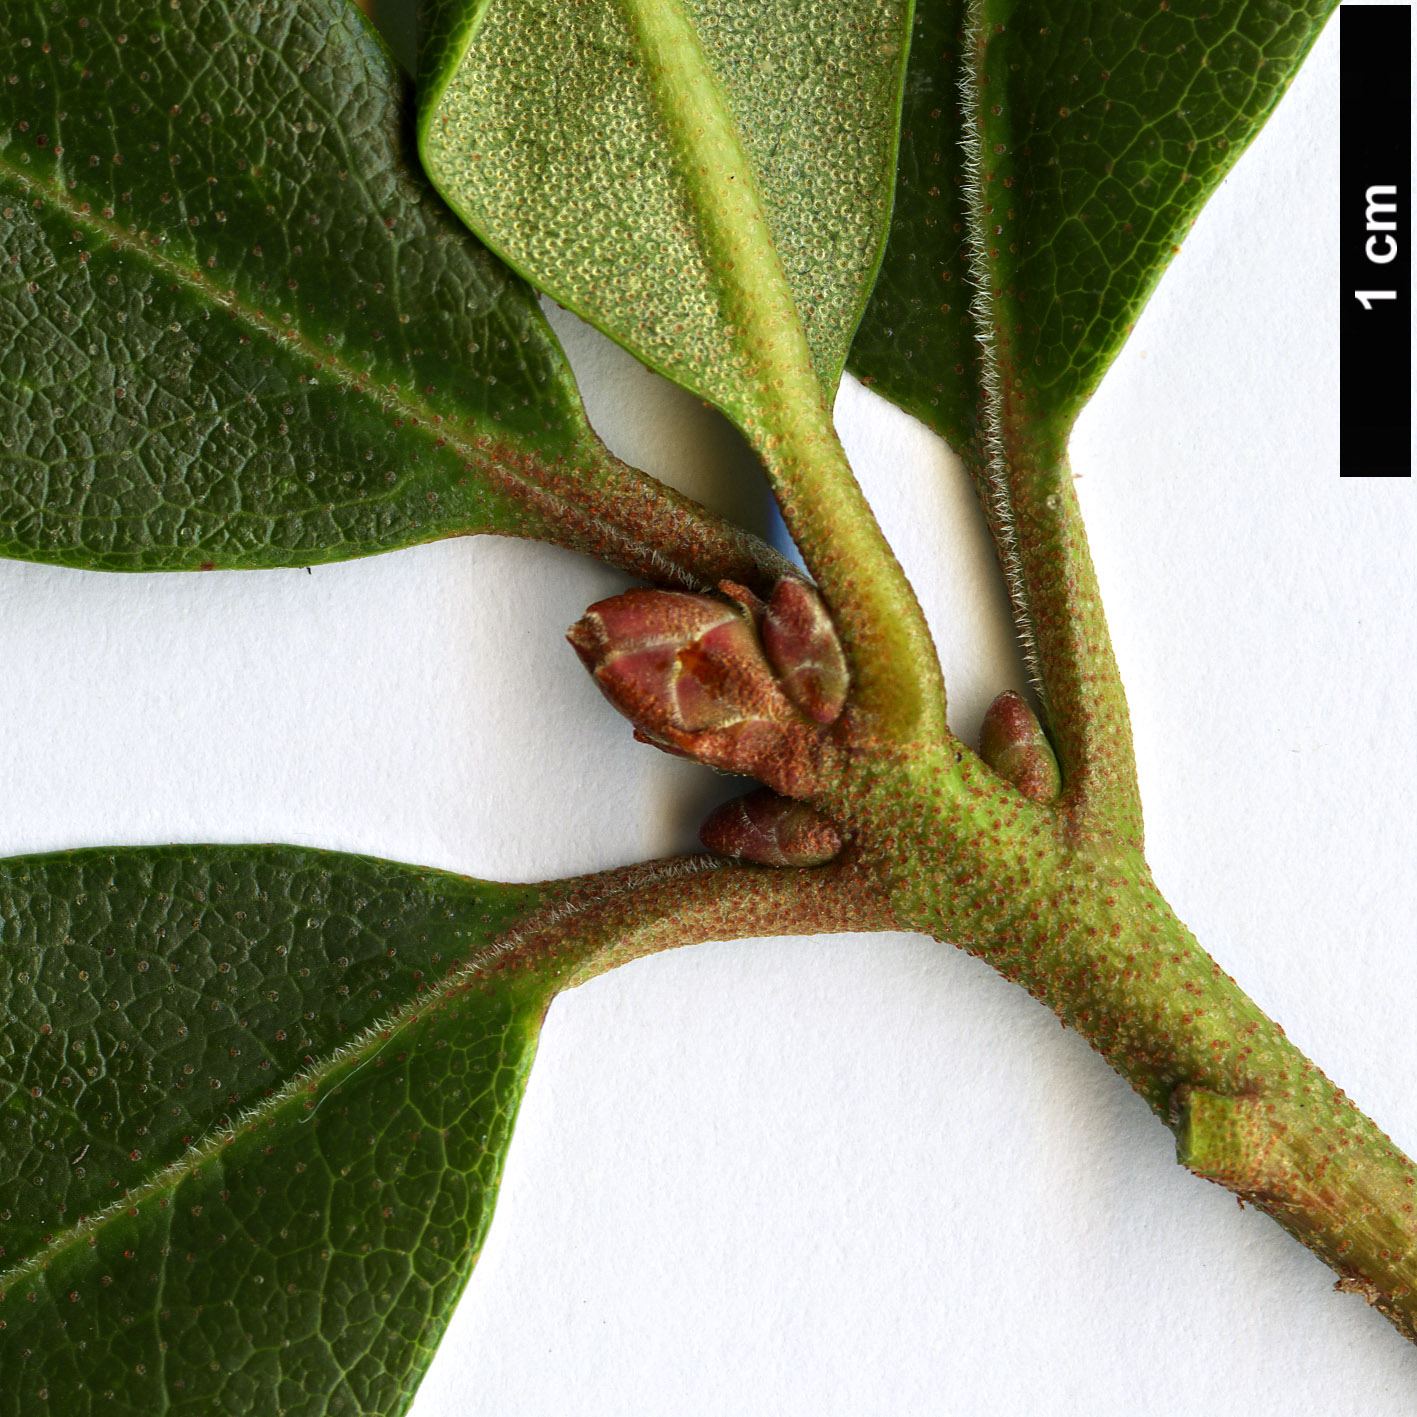 High resolution image: Family: Ericaceae - Genus: Rhododendron - Taxon: smokianum